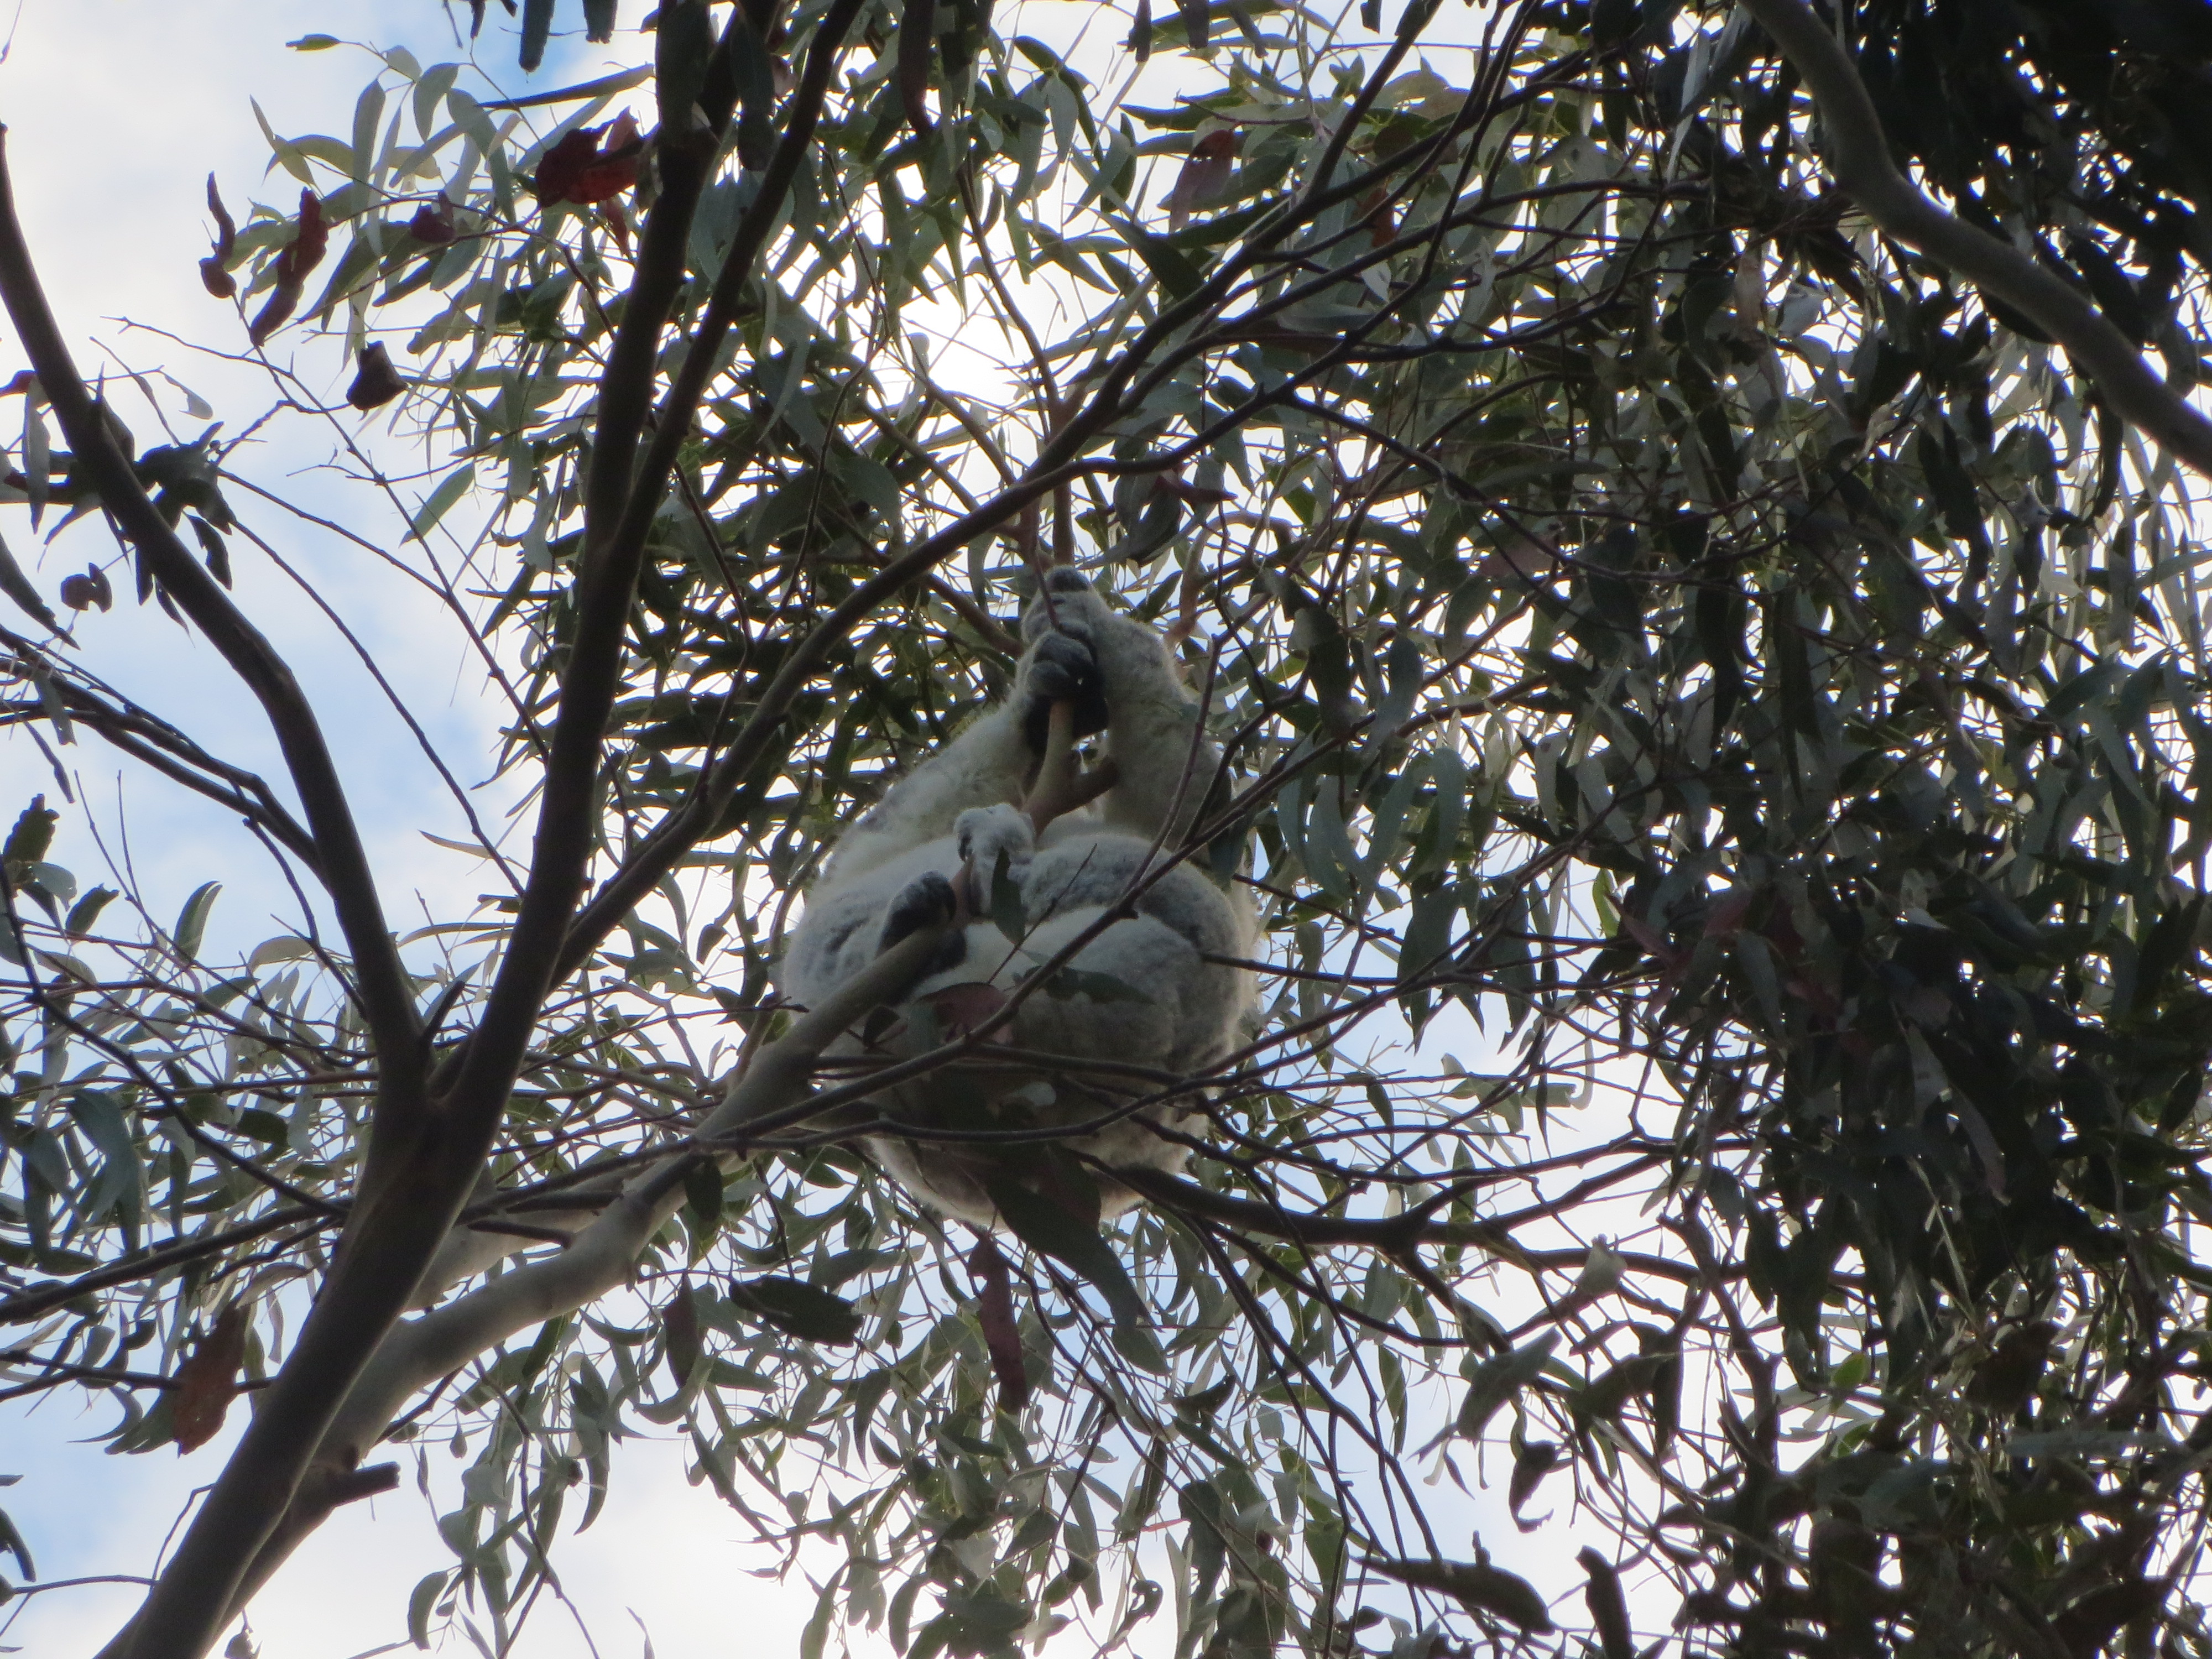 a koala sitting high up in a tree